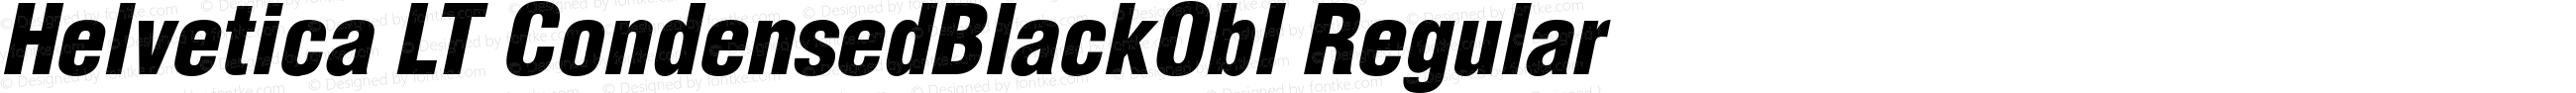 Helvetica LT CondensedBlackObl Regular